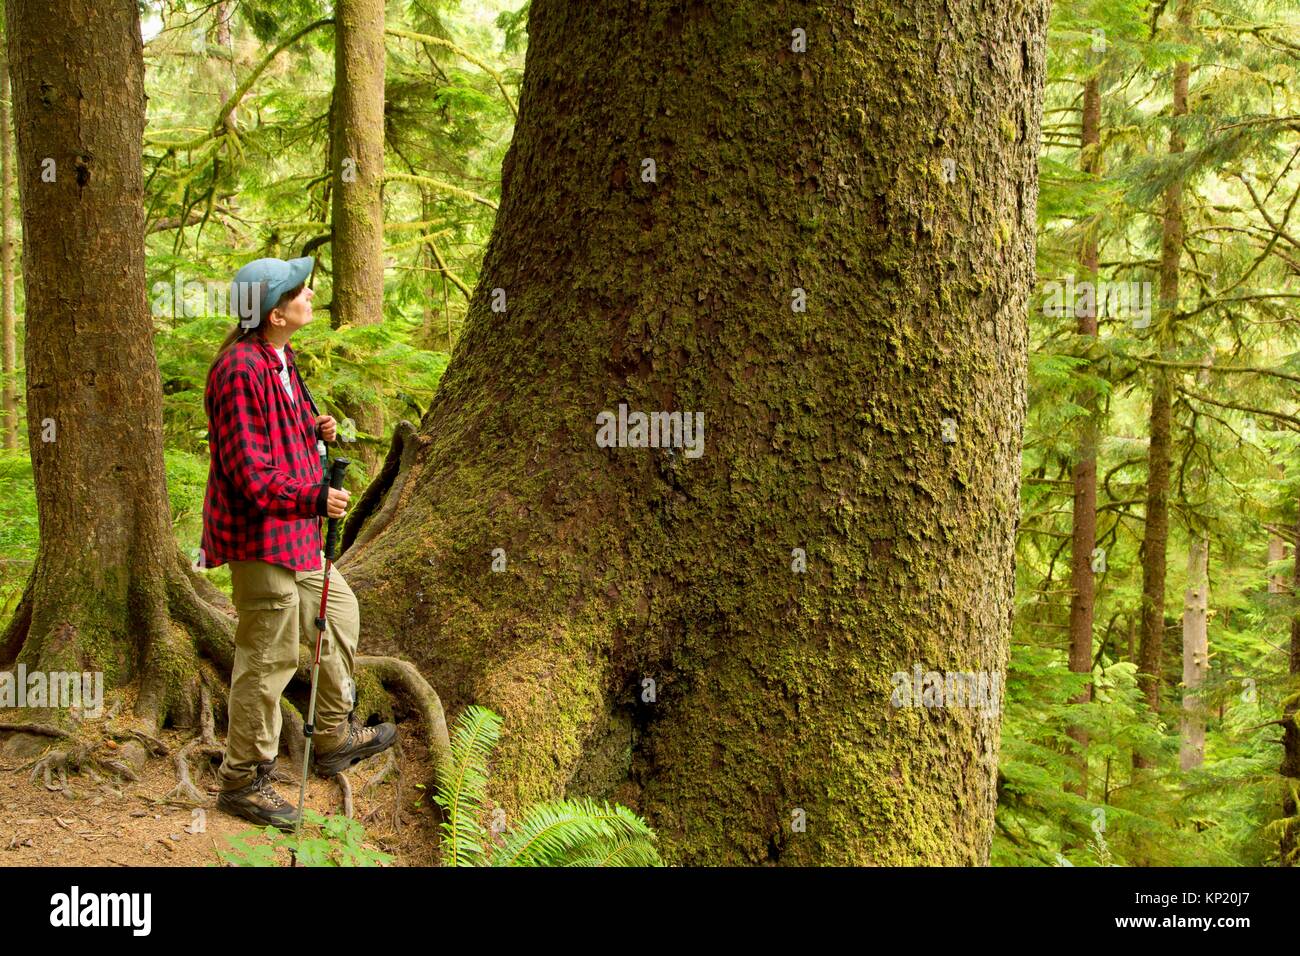 La picea de Sitka (Picea sitchensis) bosque a lo largo de Cape Falcon Trail (Oregon Coast Trail), Oswald West State Park, en el estado de Oregon. Foto de stock